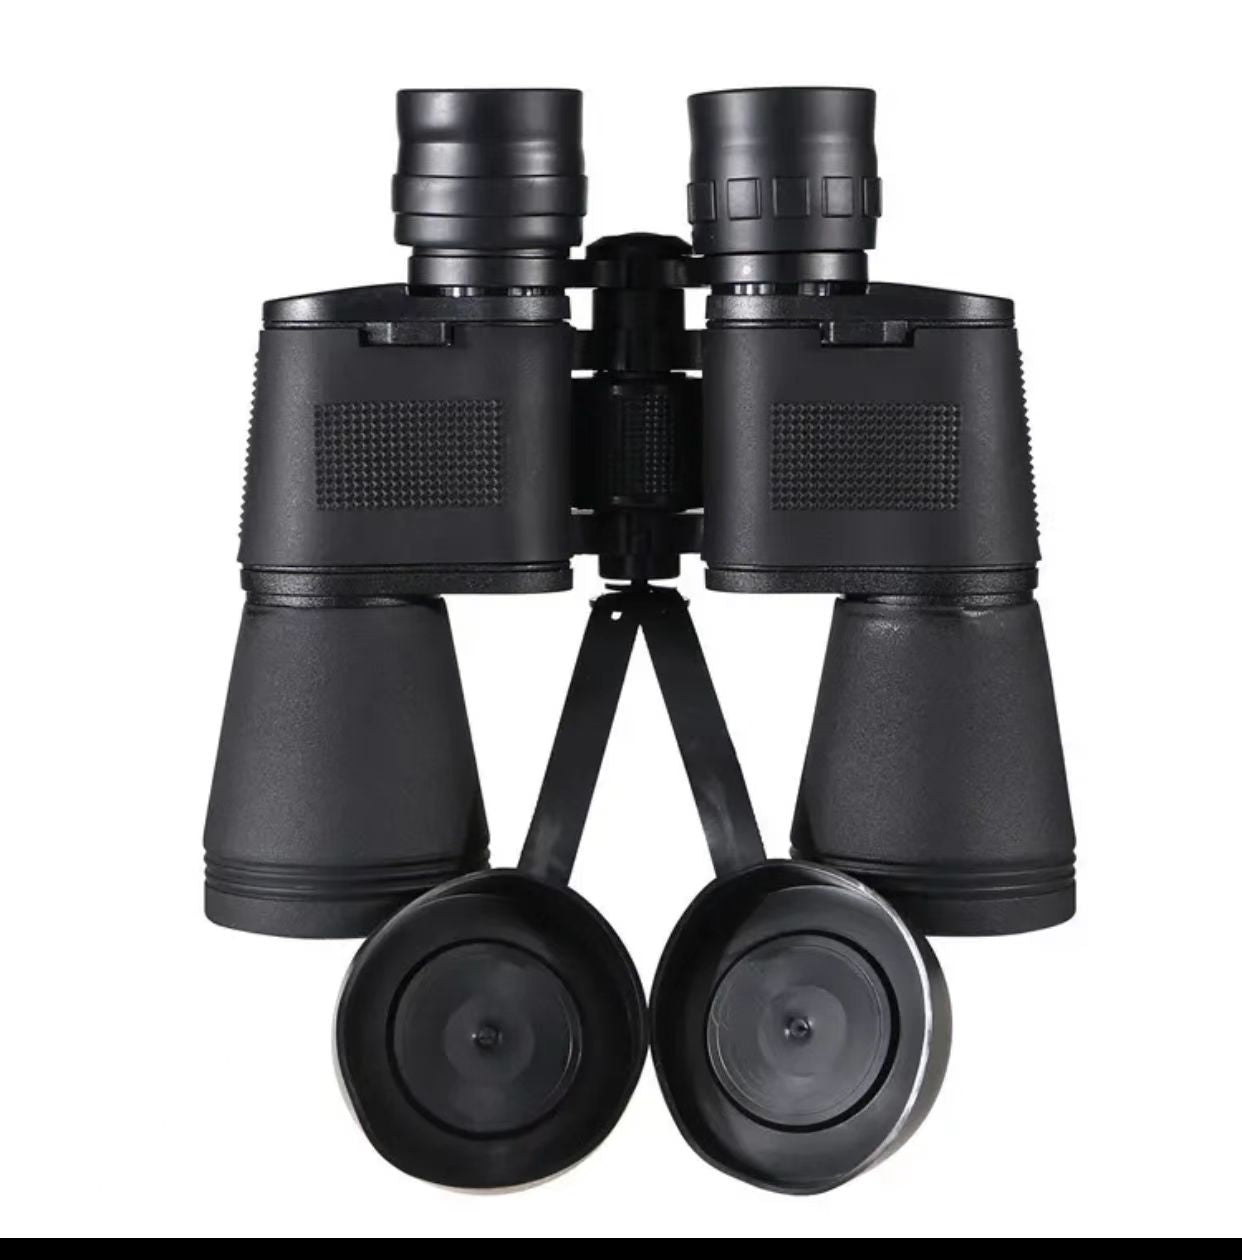 Telescopes binoculars top quality camera see-look far travel essentials appreciate nature - Duo Fashion